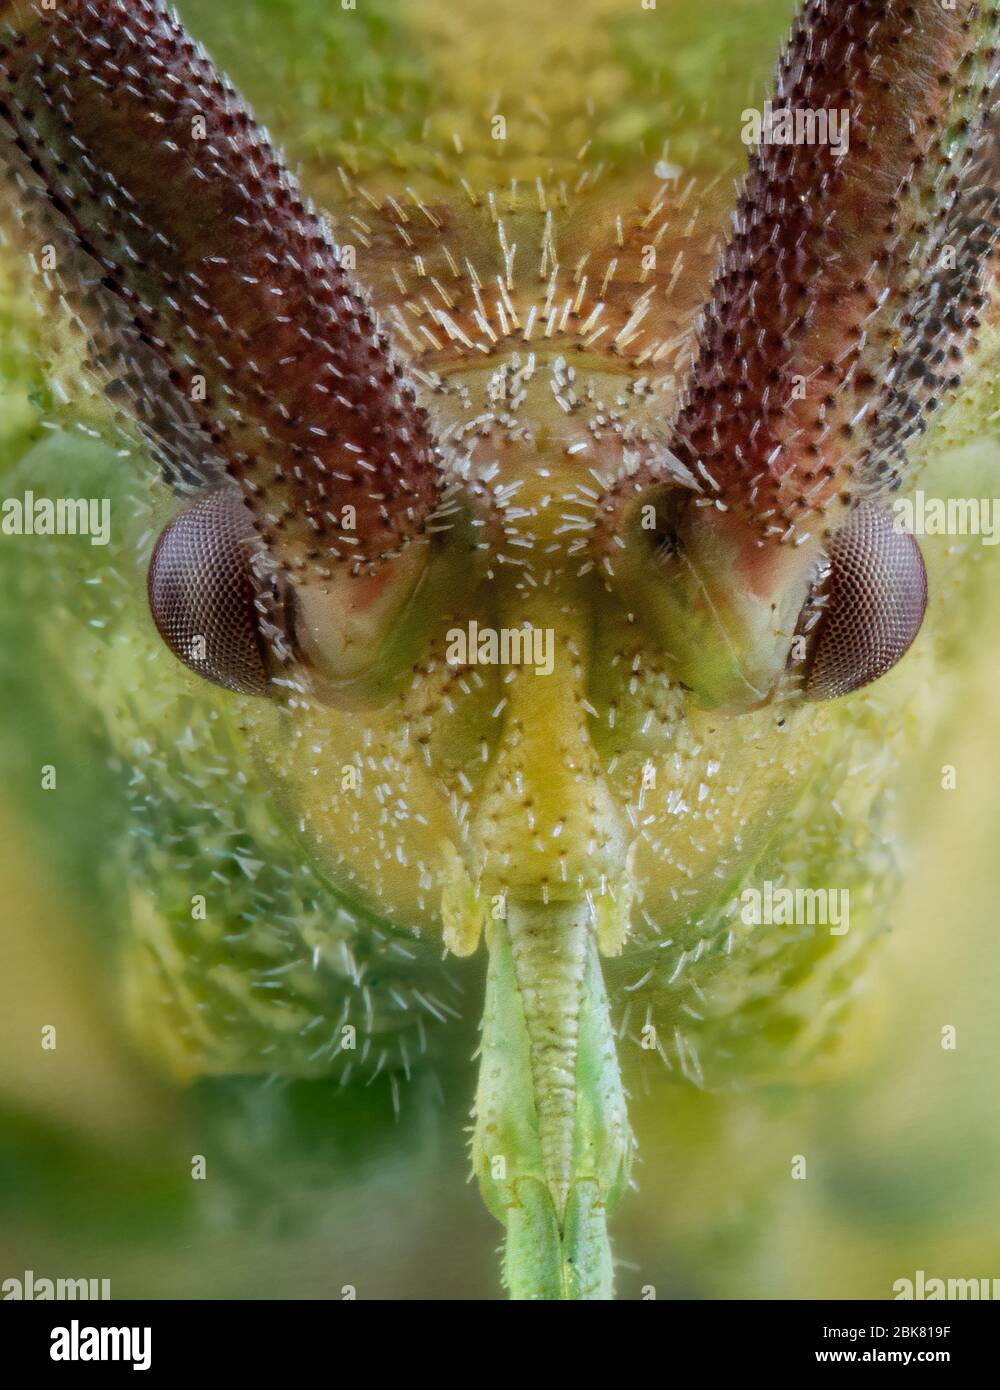 Extremes Makrobild des Insekts Stockfoto